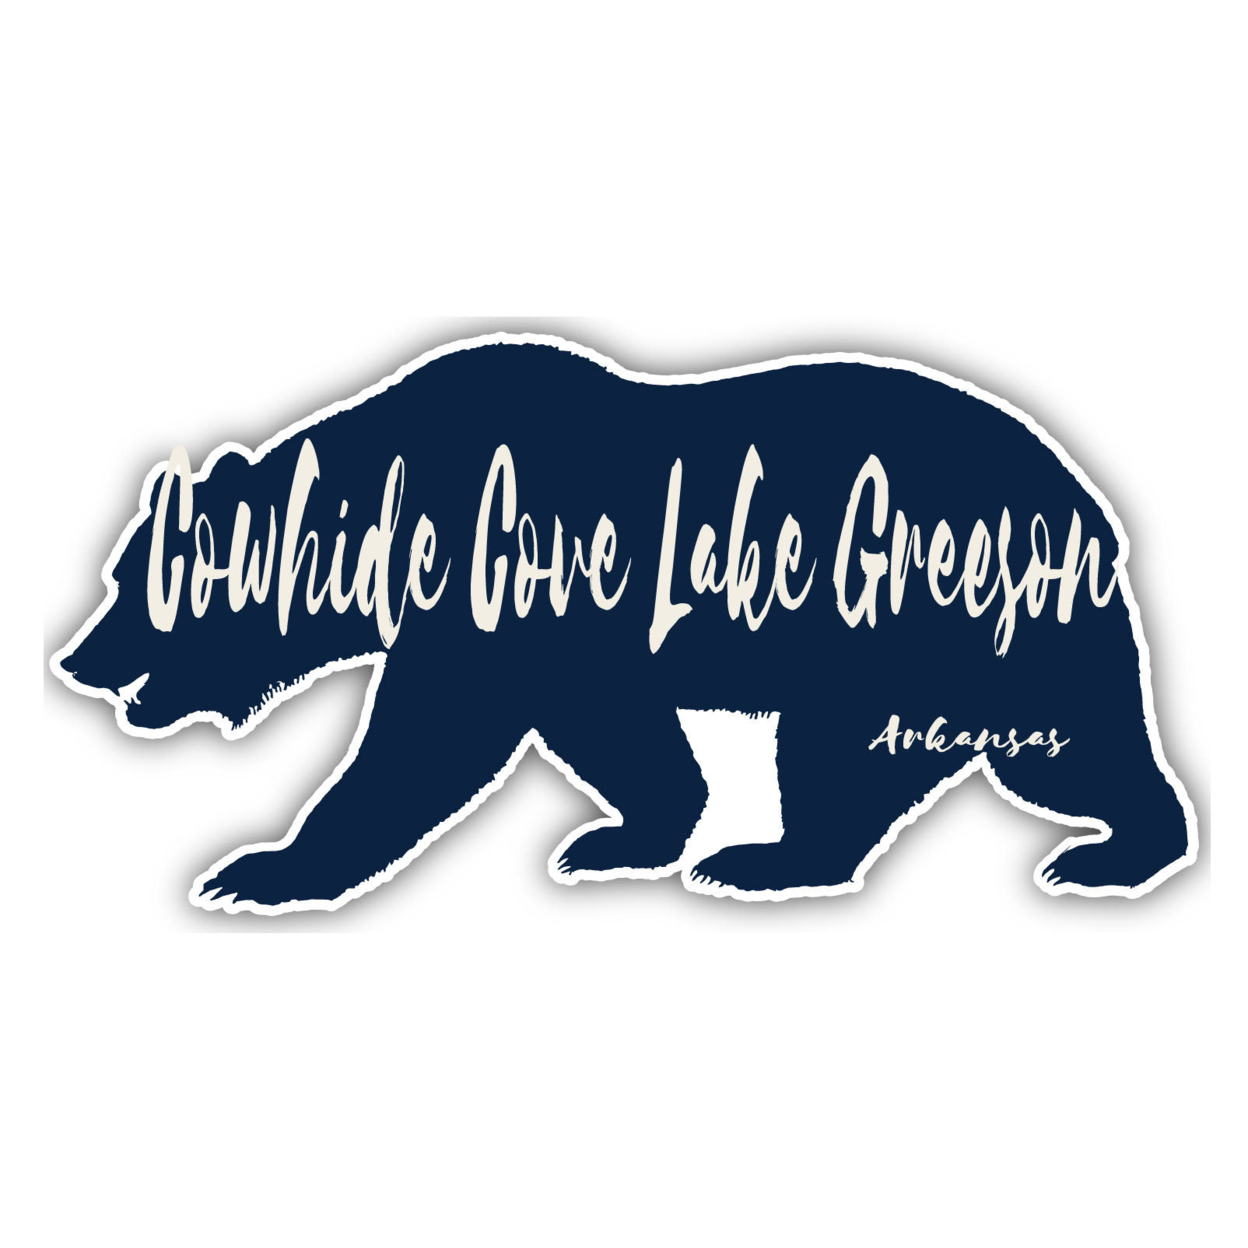 Cowhide Cove Lake Greeson Arkansas Souvenir Decorative Stickers (Choose Theme And Size) - 4-Pack, 10-Inch, Bear